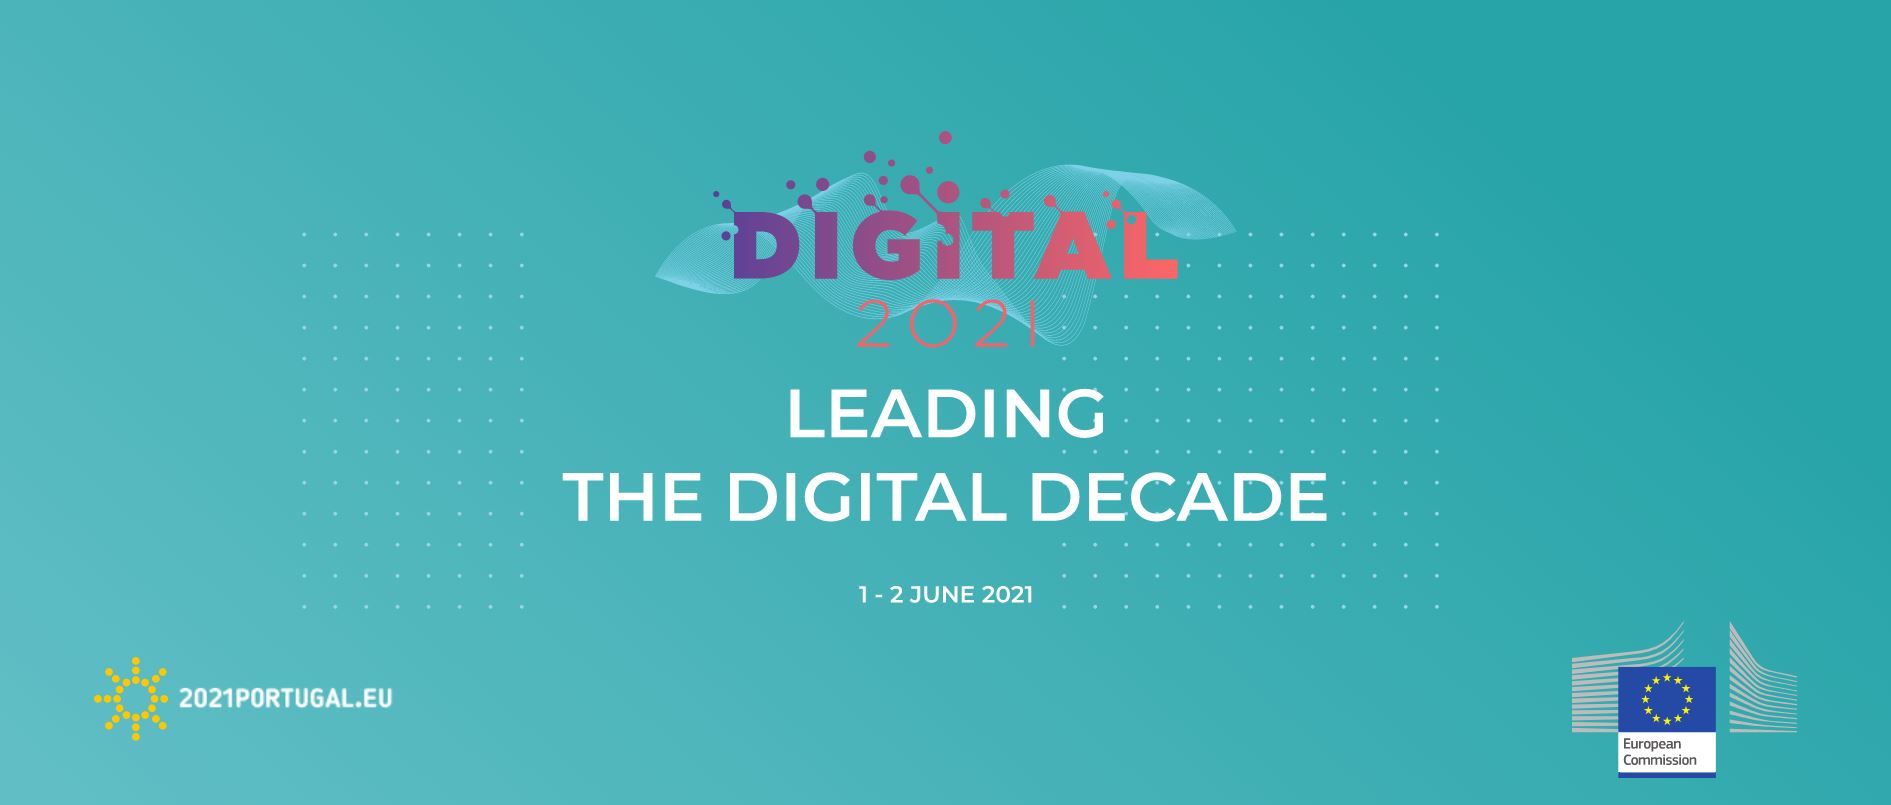 Leading the digital decade